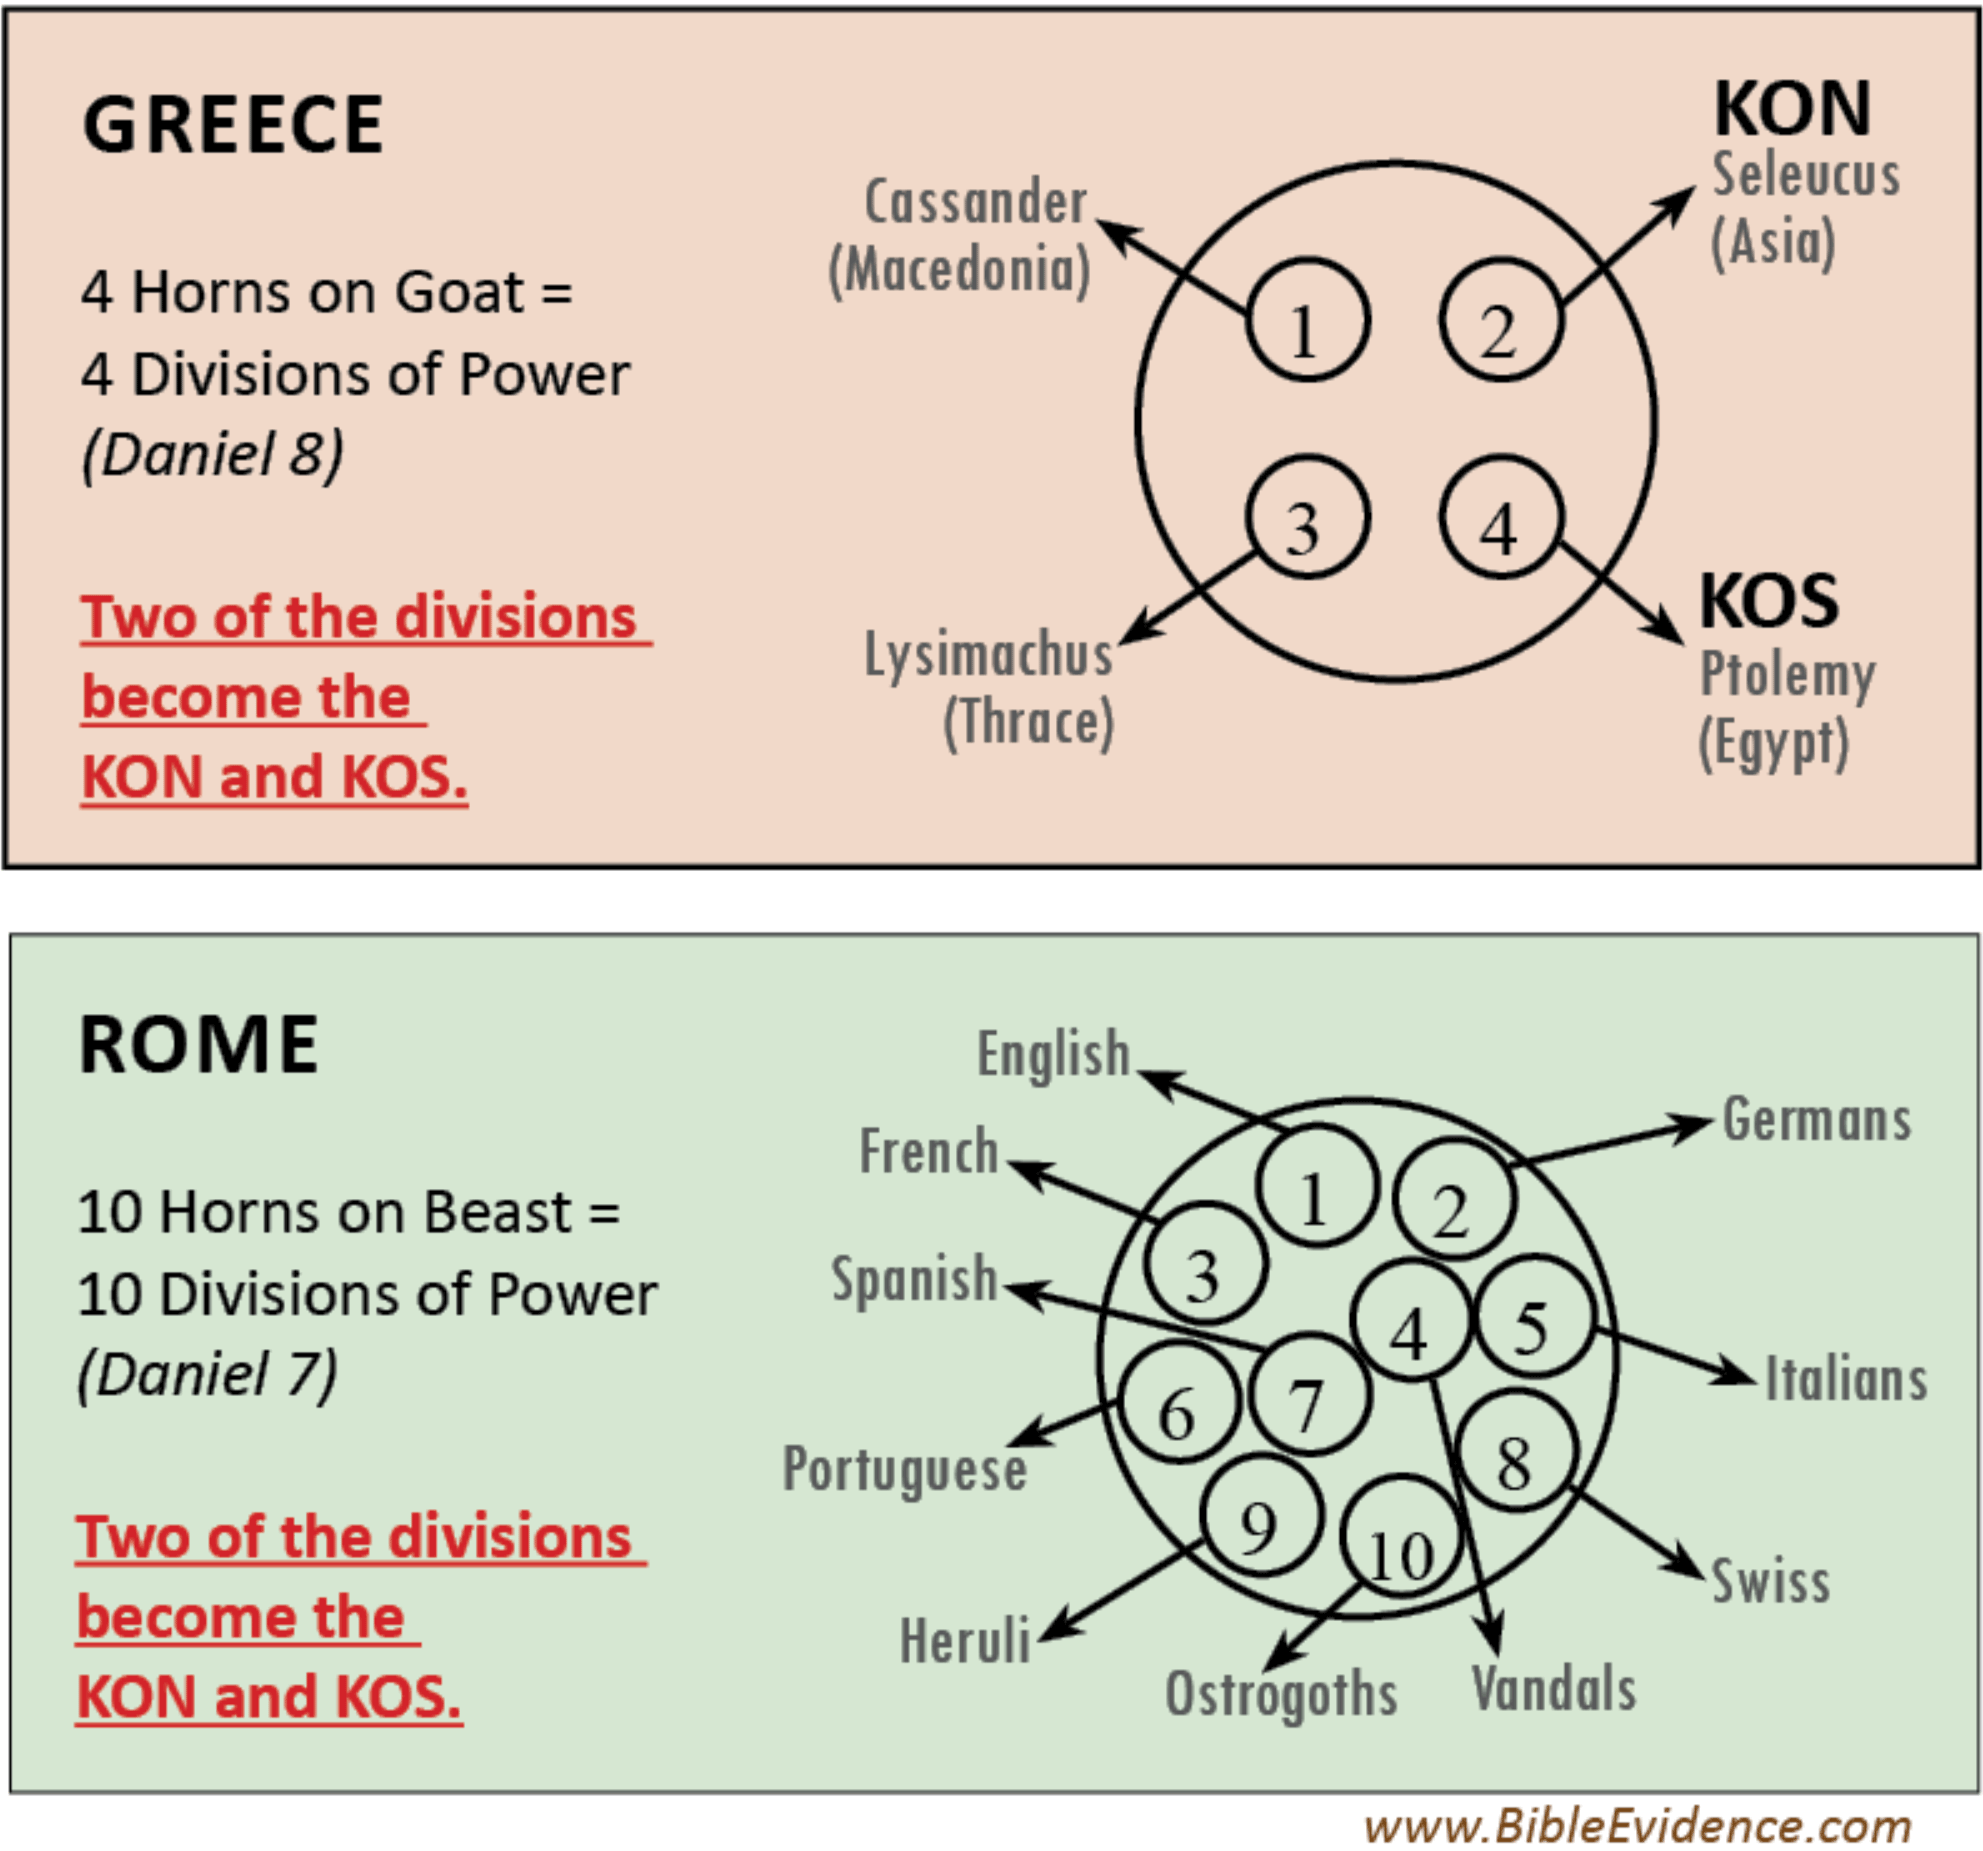 Precedent: Division of Greece